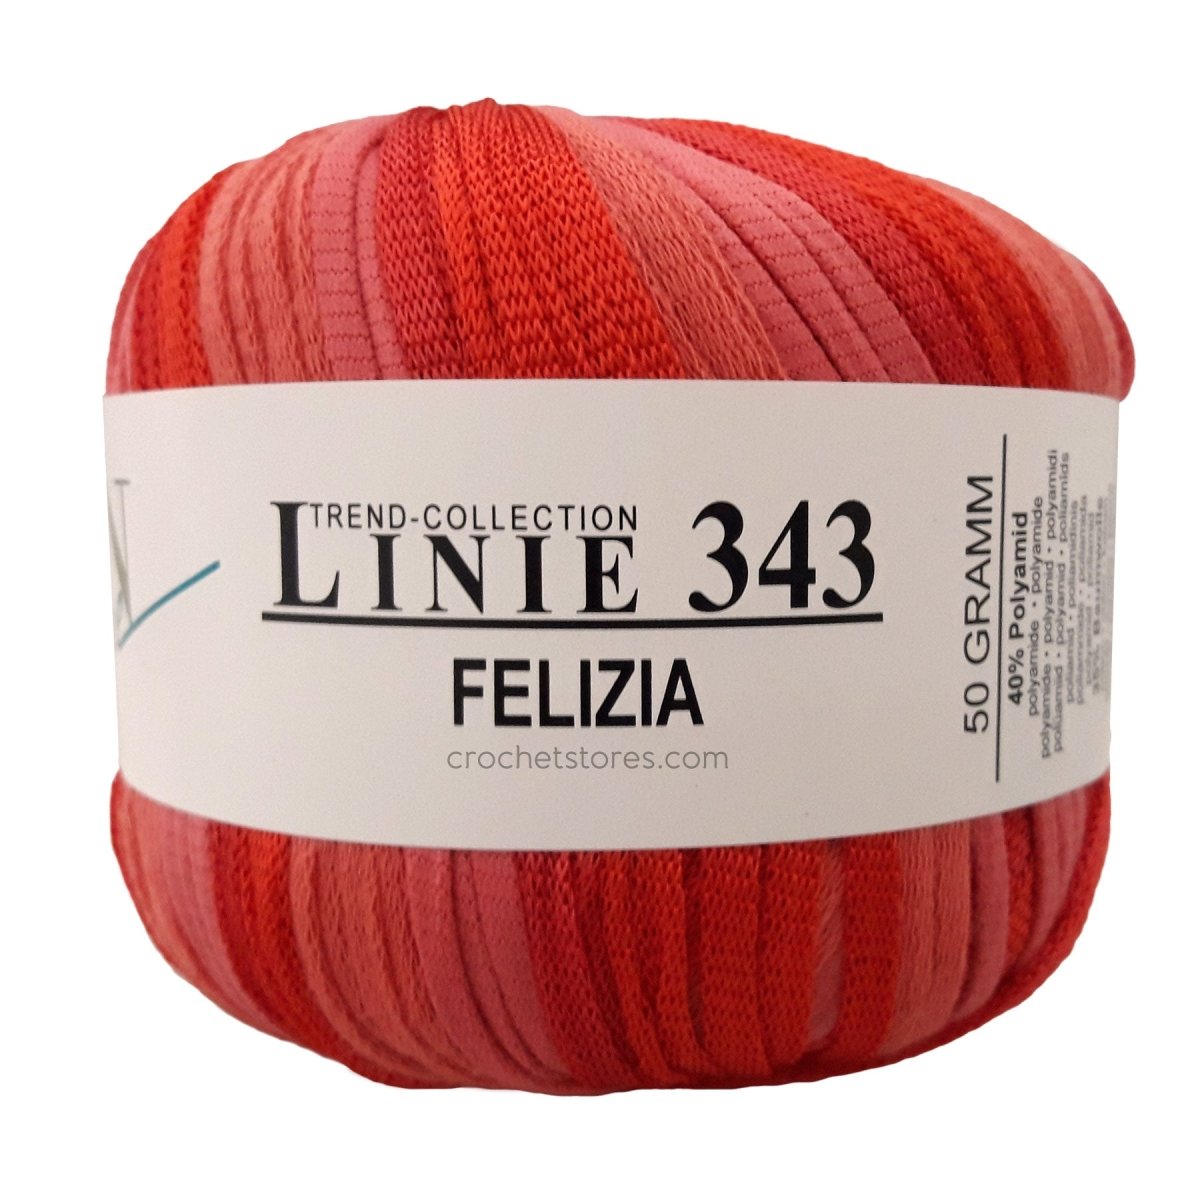 FELIZIA - Crochetstores110343-034014366146742